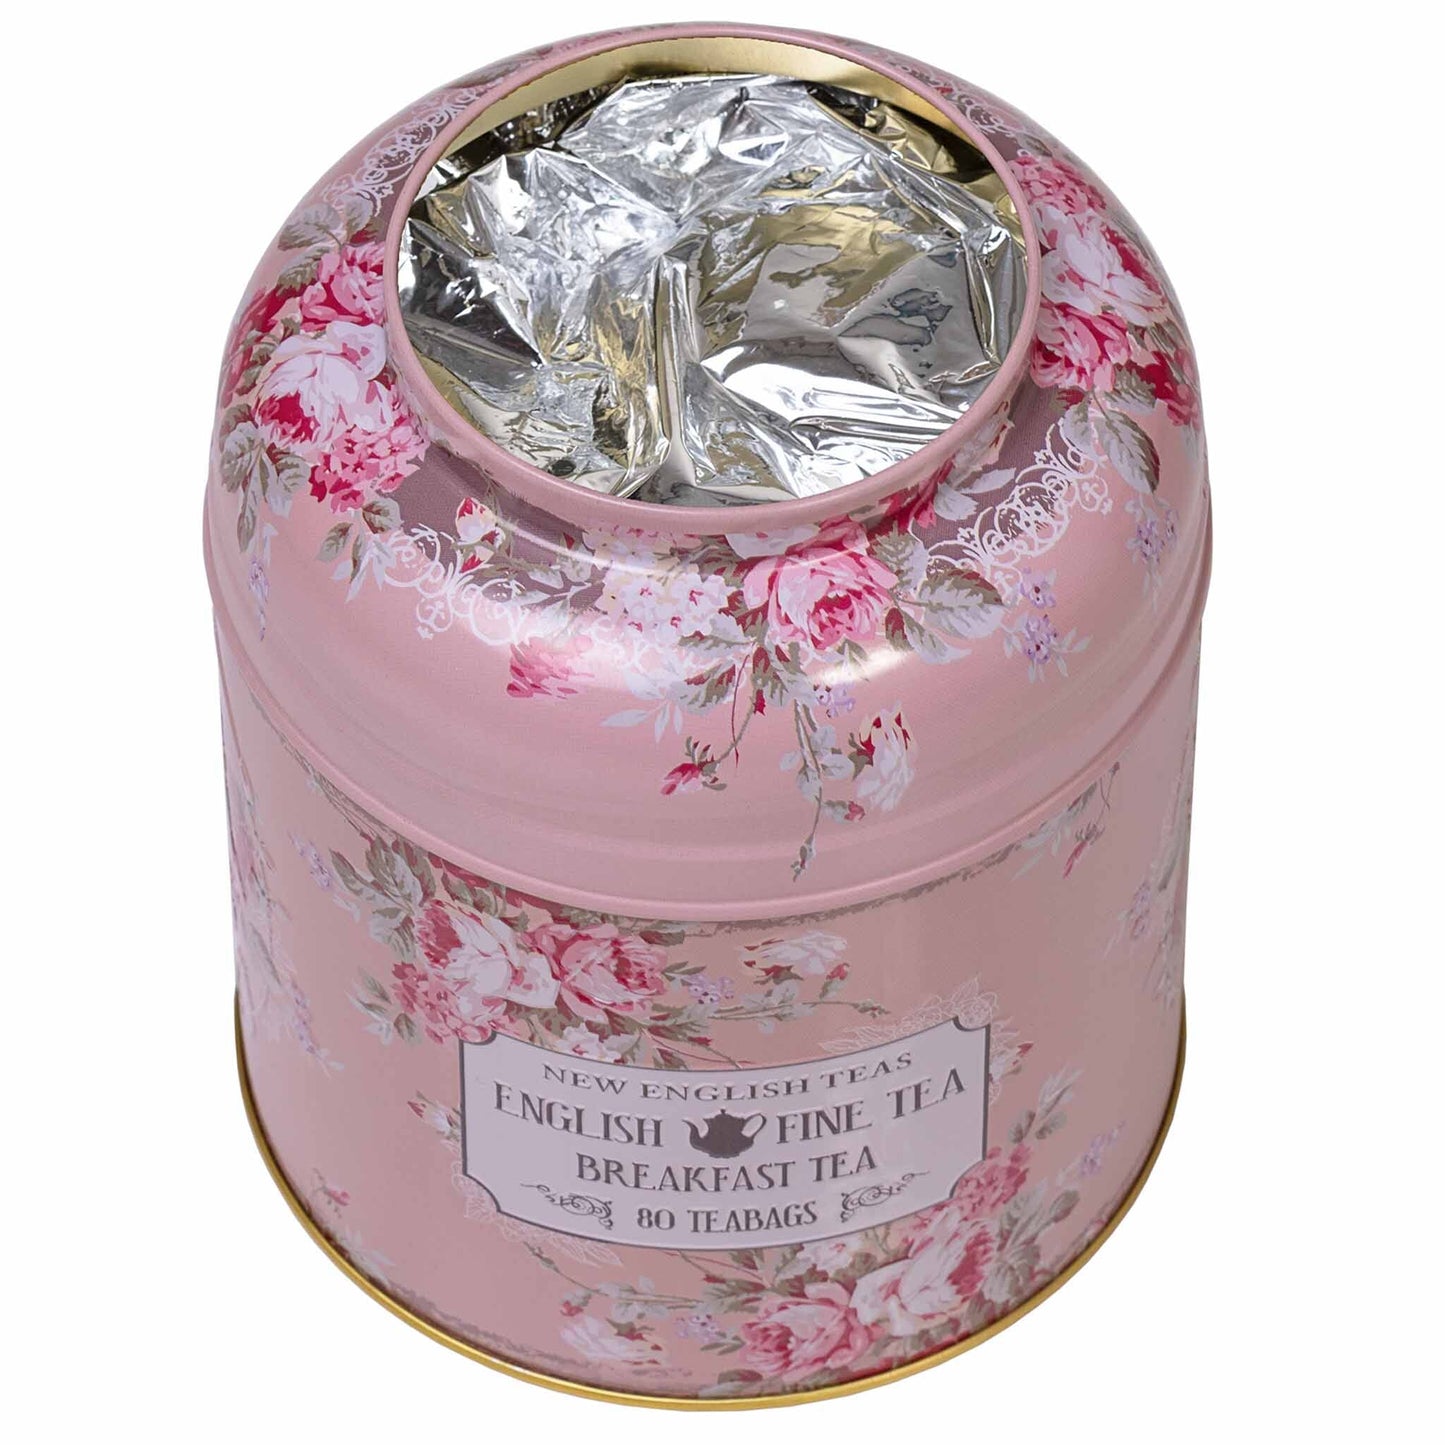 Floral English Fine Teas Tea Caddy With 80 English Breakfast Teabags - Peach Tea Tins New English Teas 